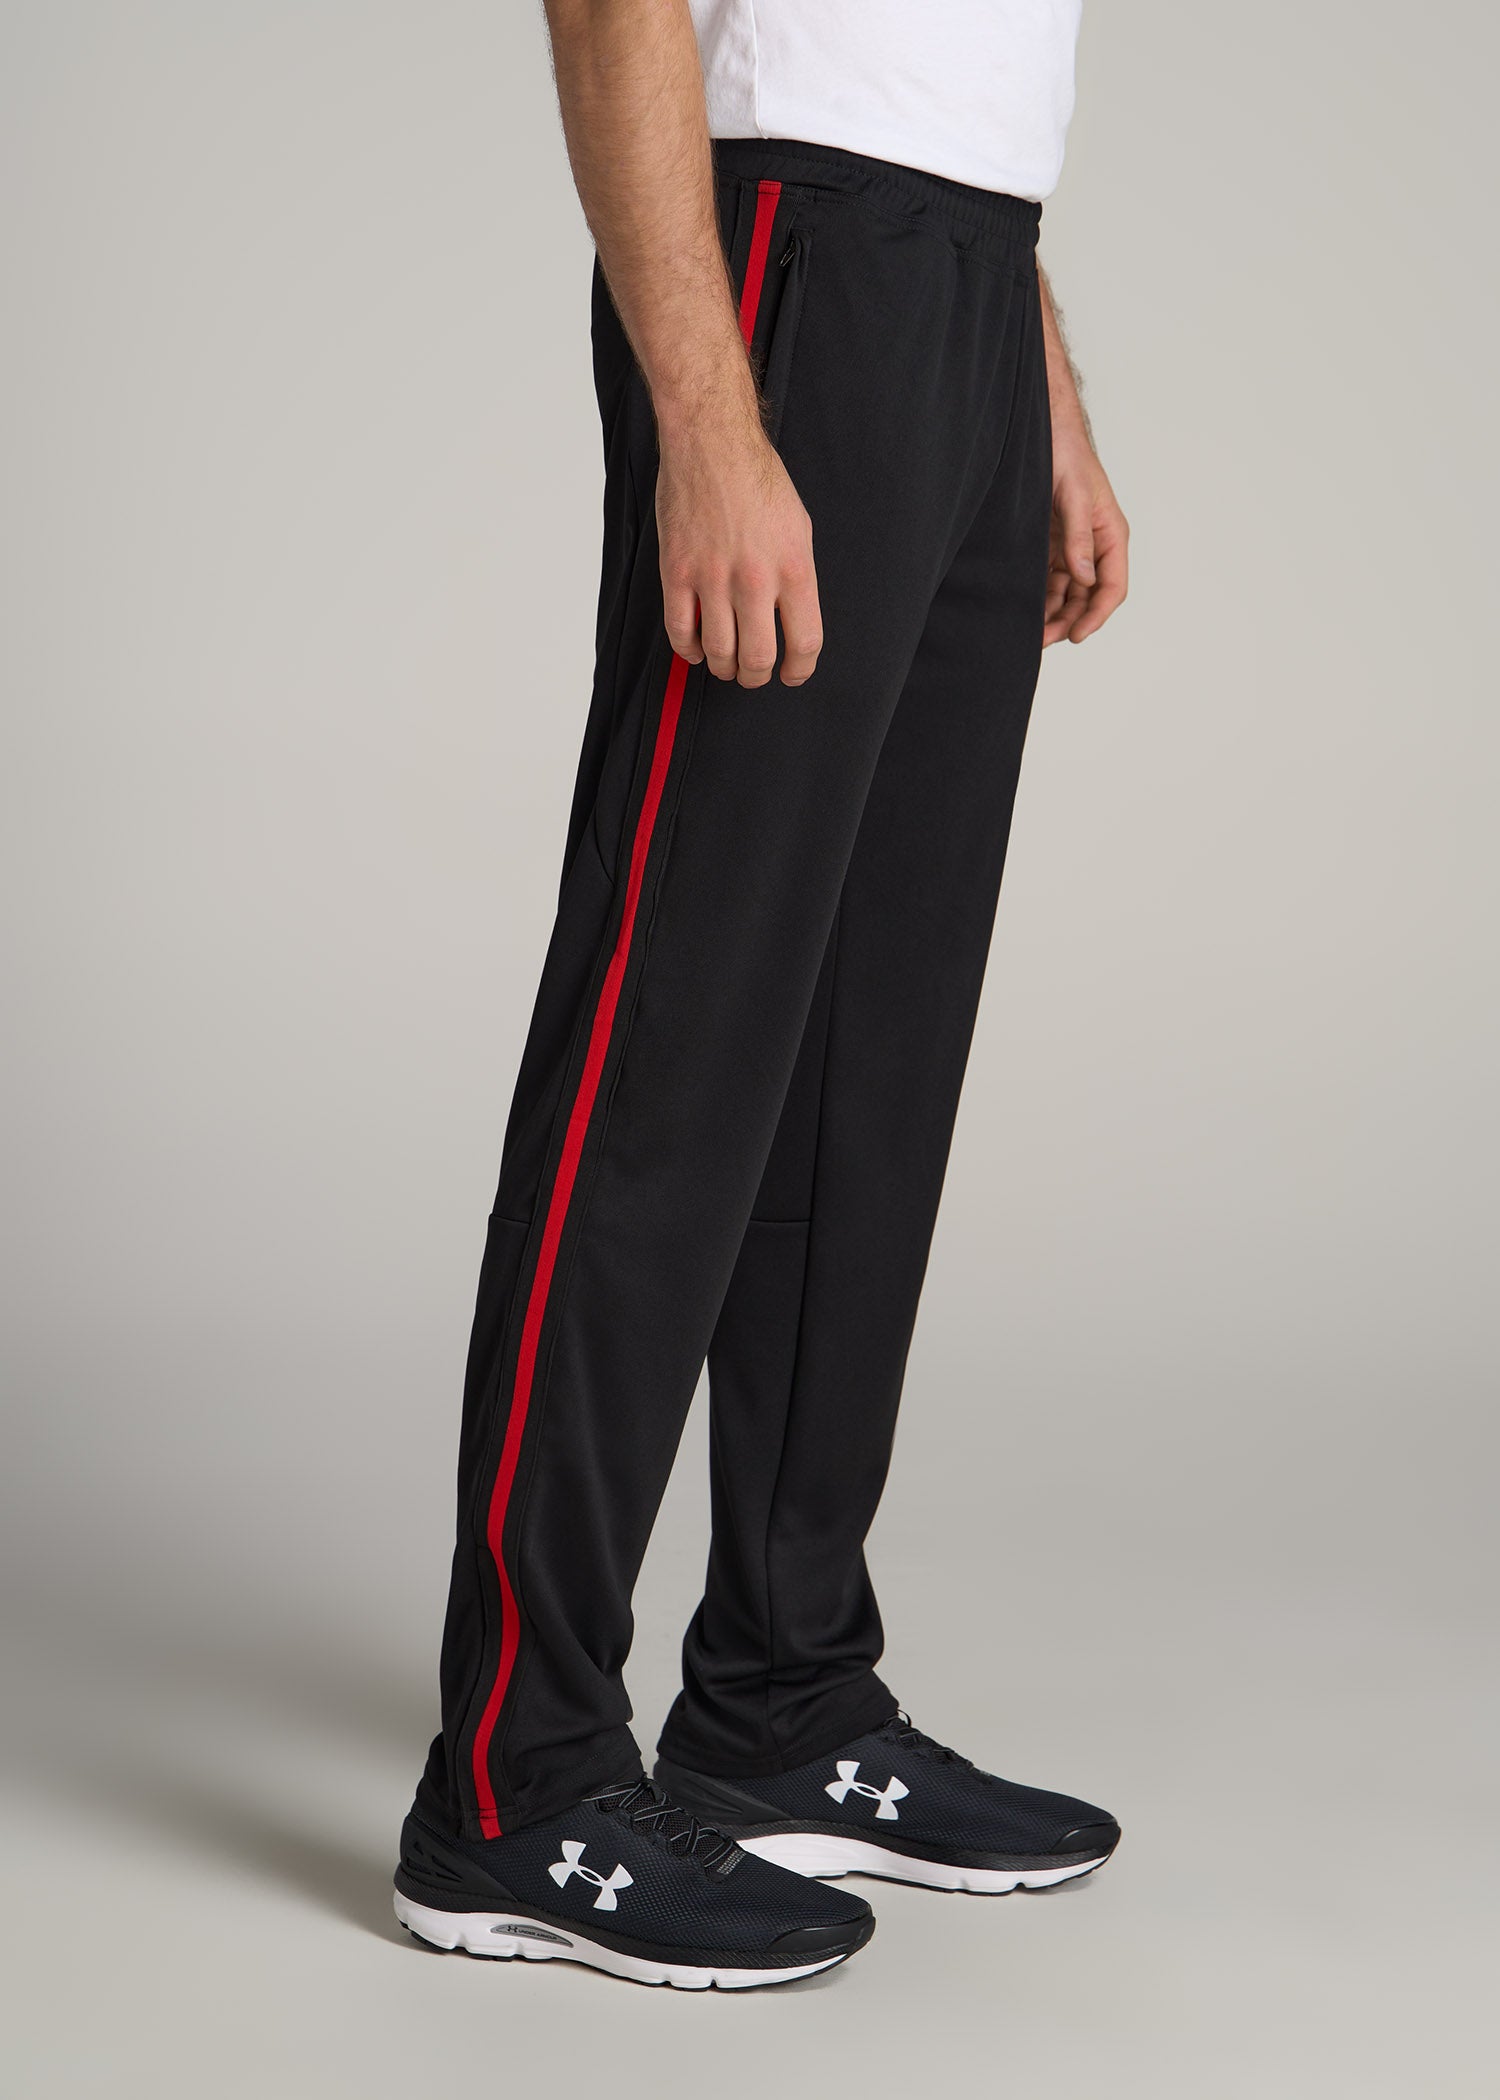 Black Red Stripe Pant For Tall Men